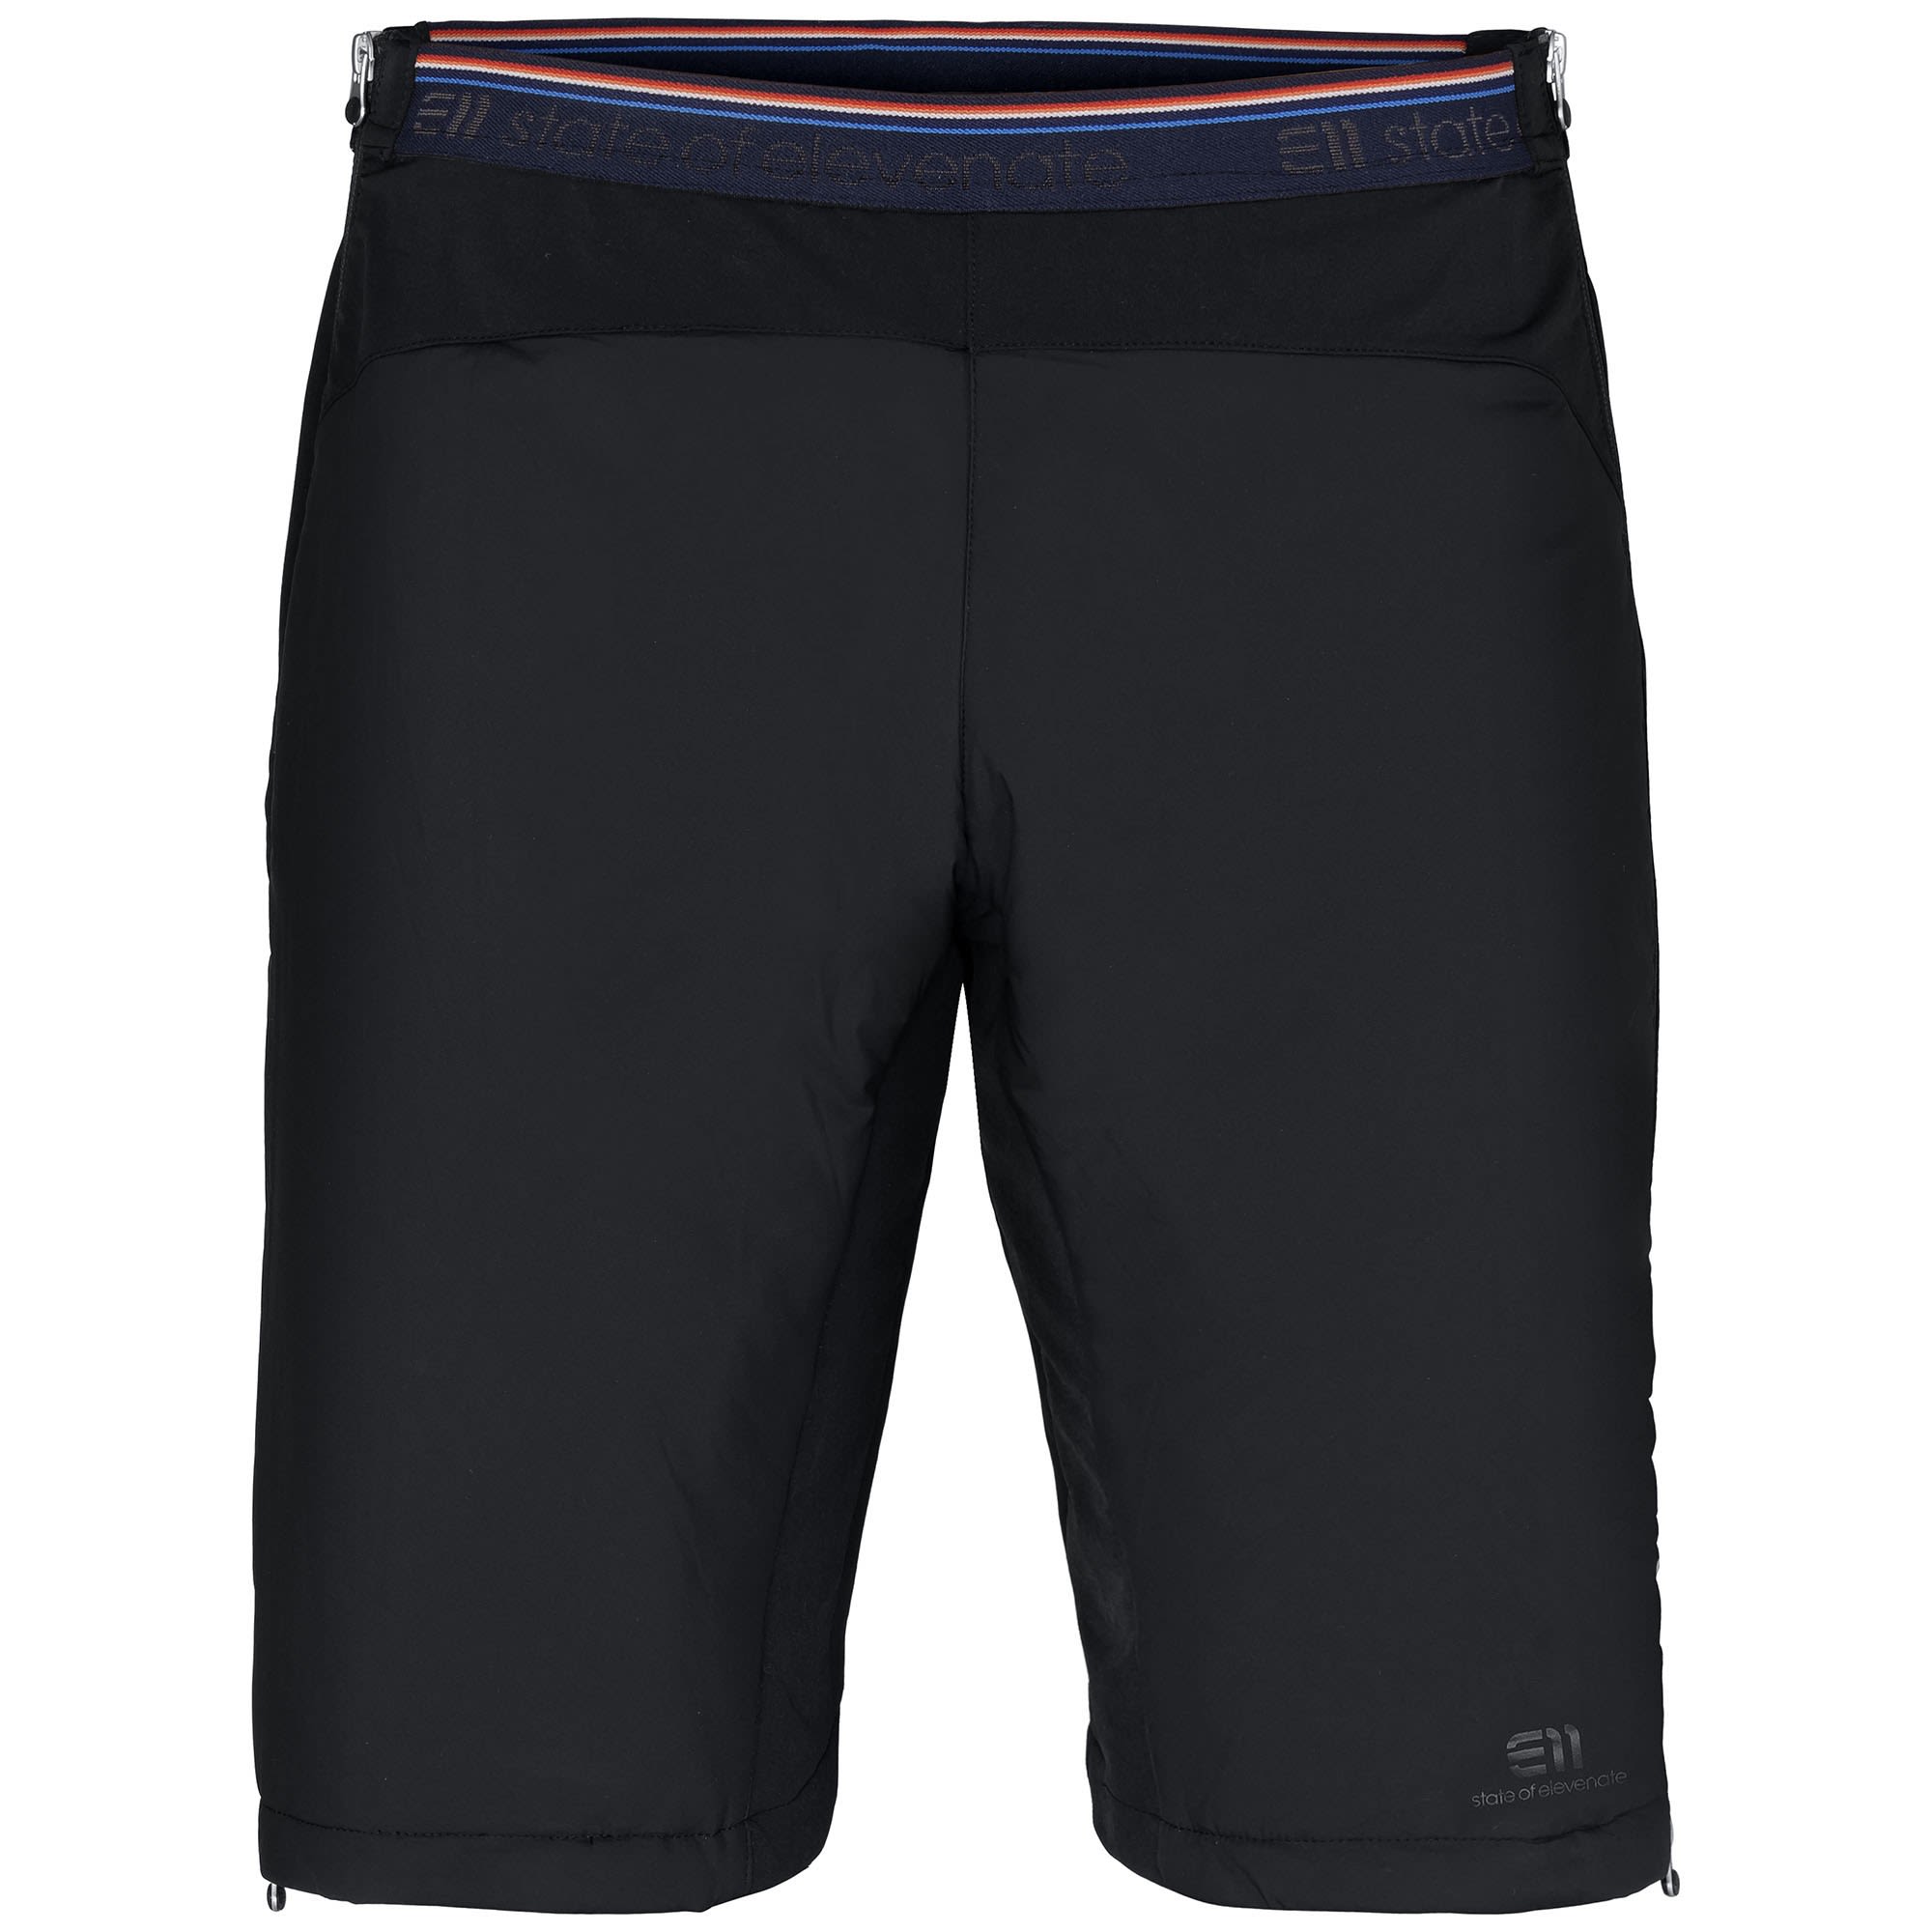 Elevenate Transition Shorts Schwarz- Male Daunen Shorts- Grsse L - Farbe Black